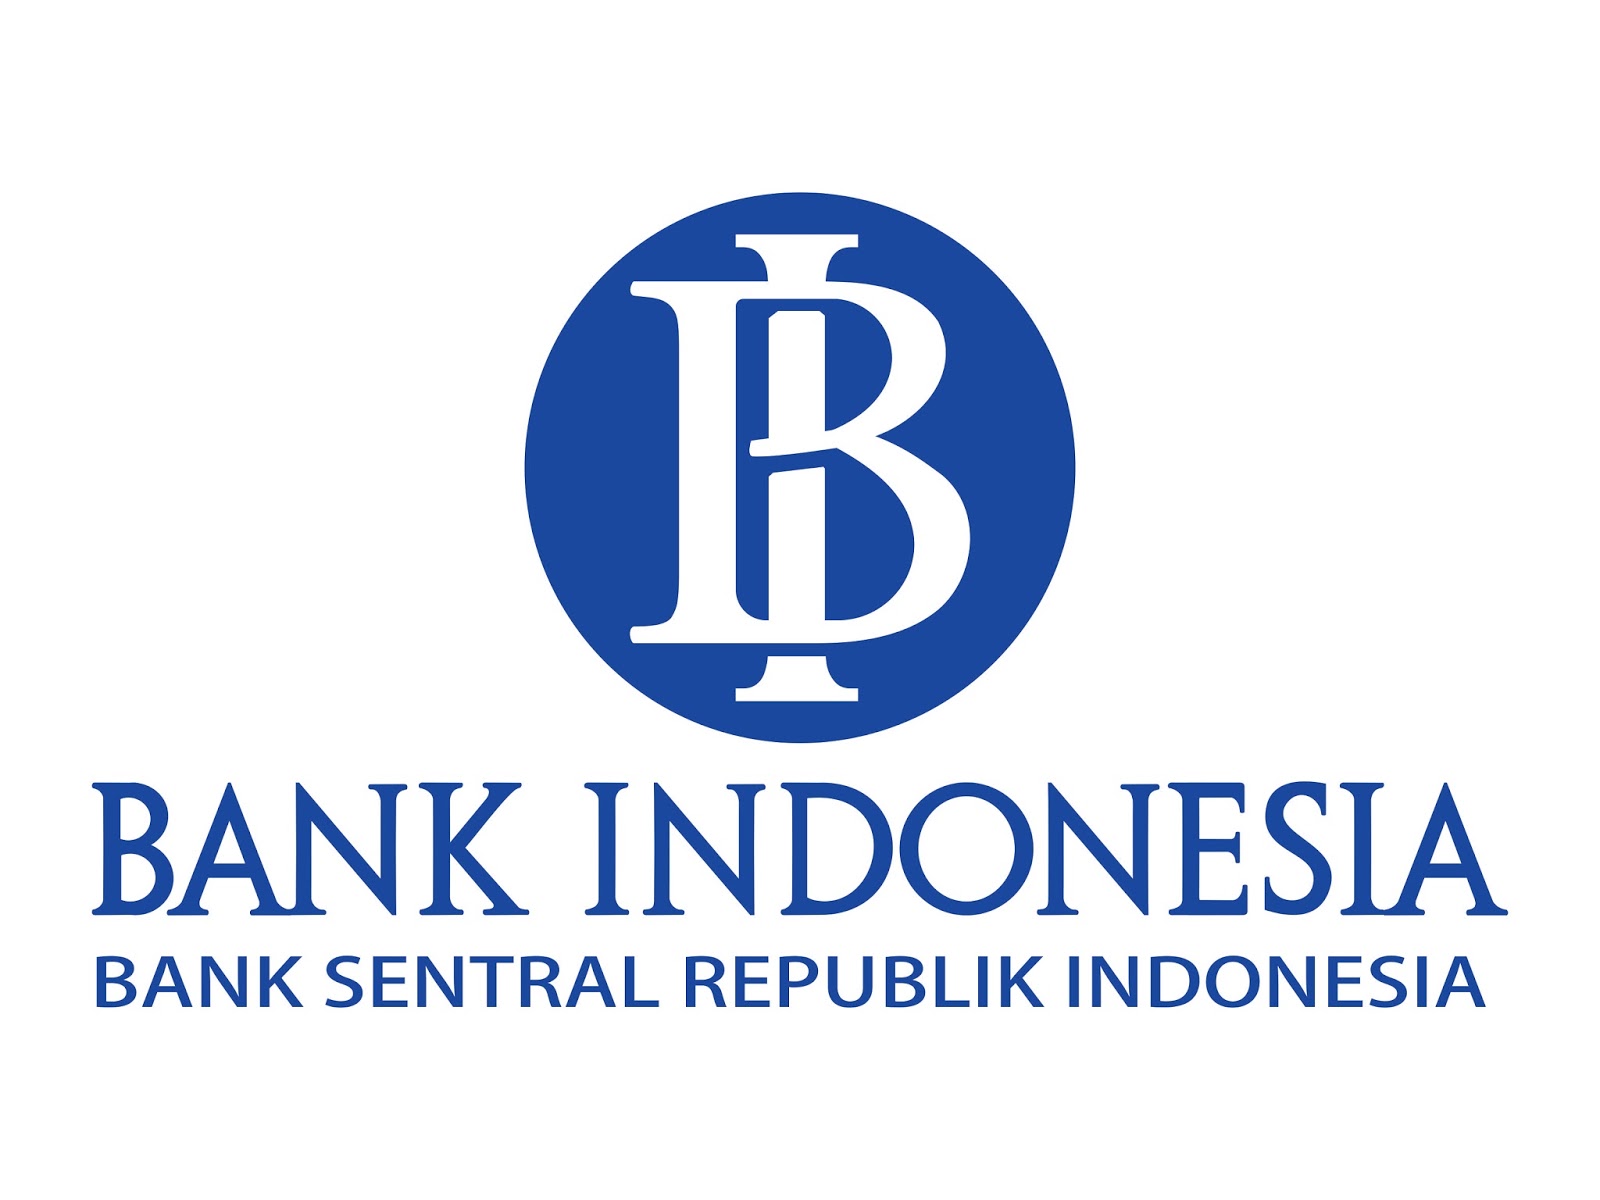 Bank Indonesia-Bank of Korea establish central banking cooperation